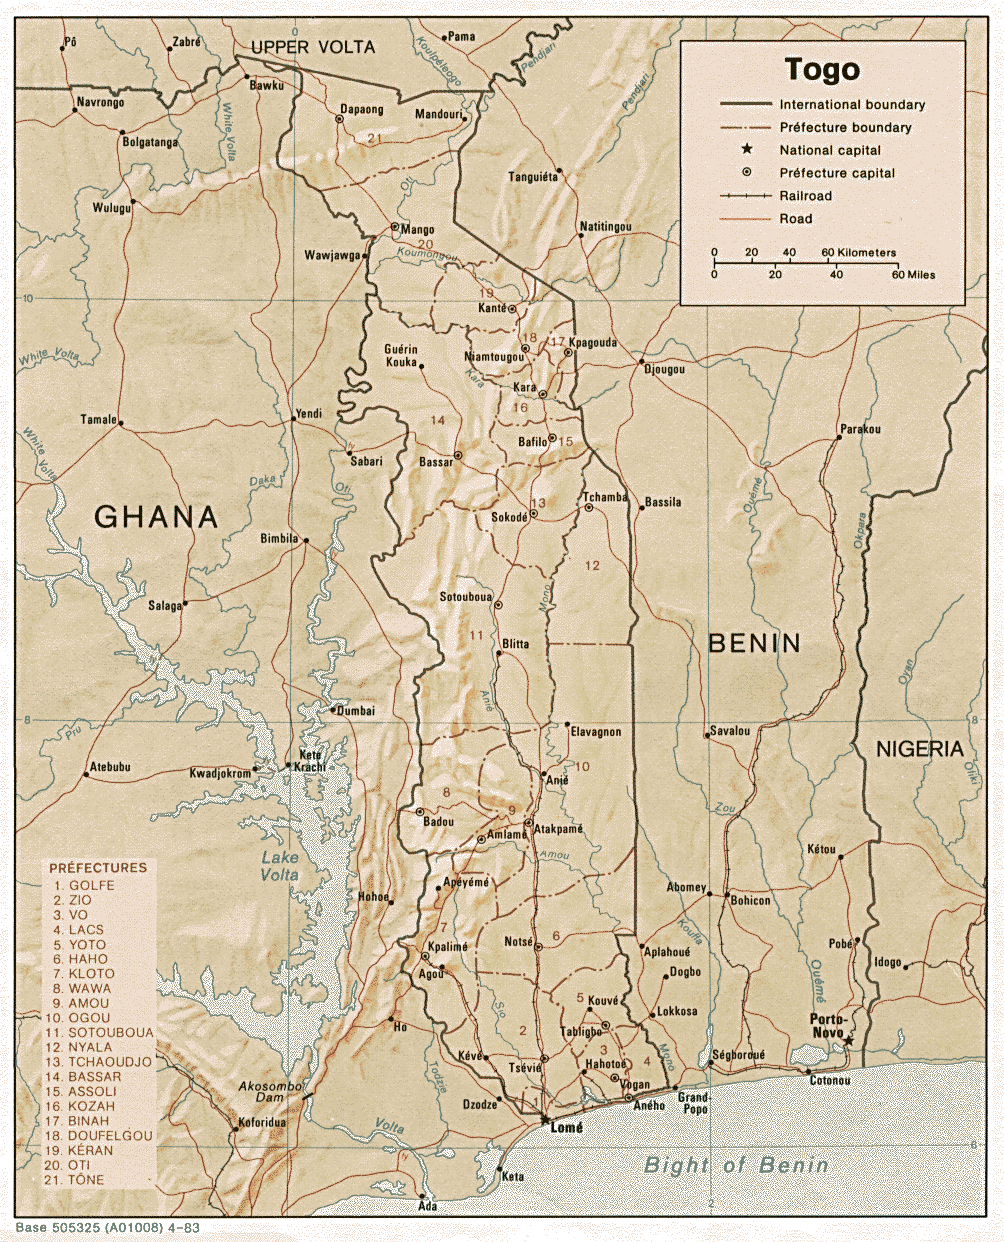 TOGO Togo; Republic of Togo 1973 old vintage map plan chart 